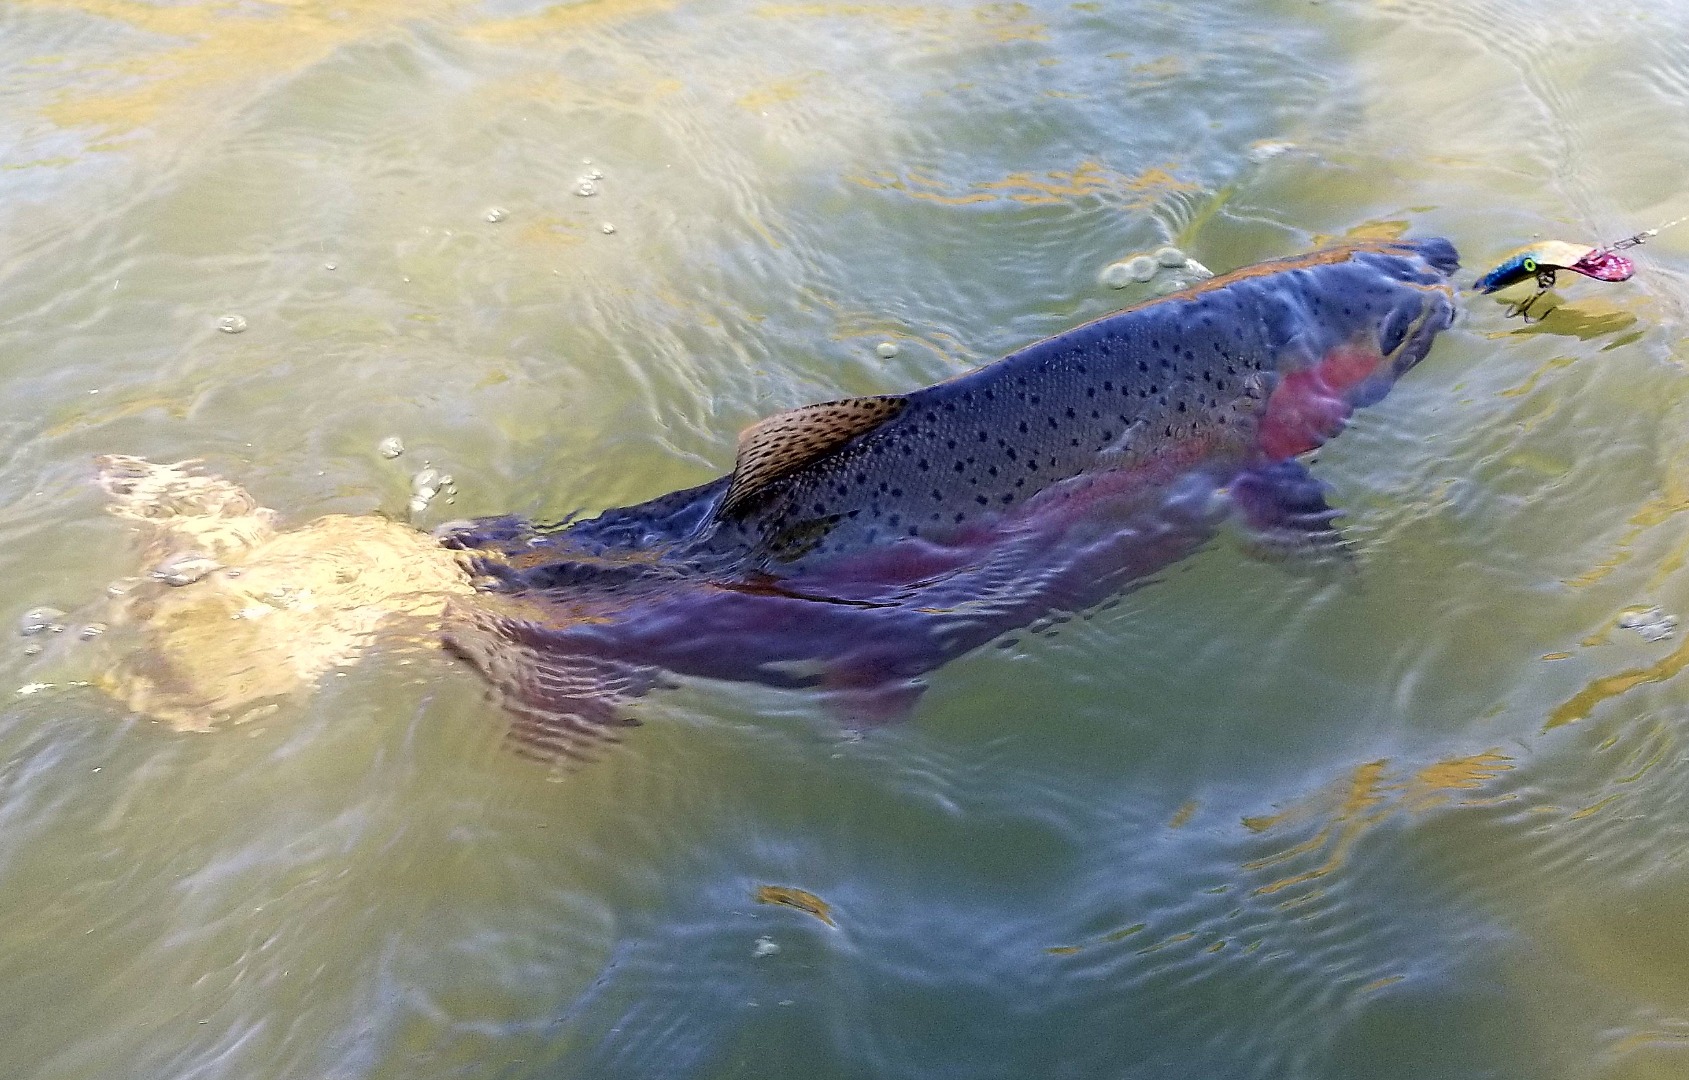 Klamath River Fishing "Not a Bad Day"